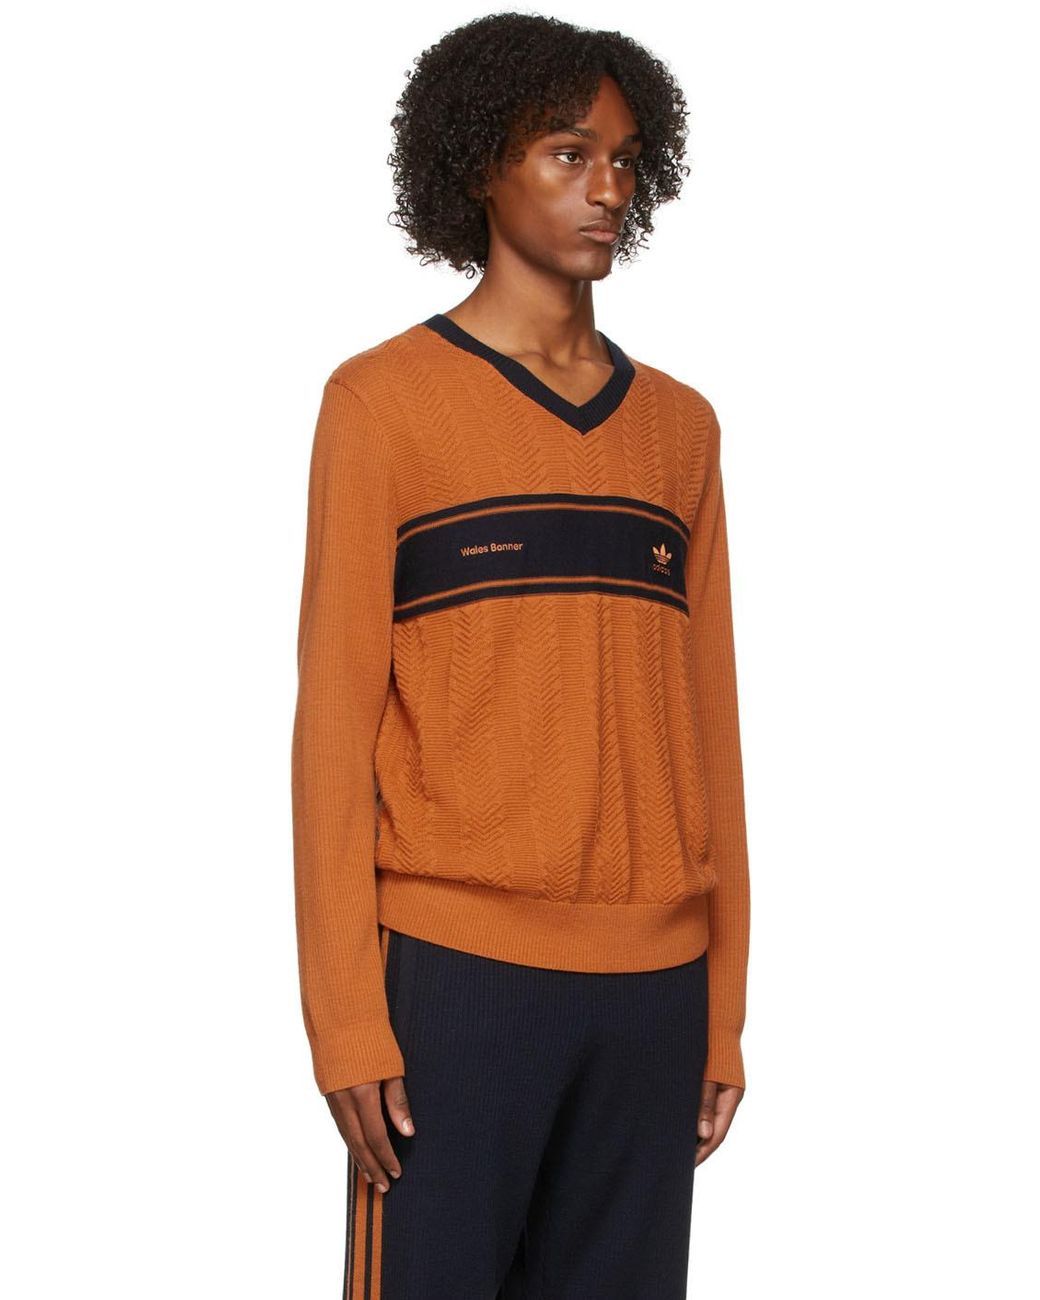 Wales Bonner Adidas Originals Edition Knit V-neck Sweater in Orange for Men  | Lyst Australia